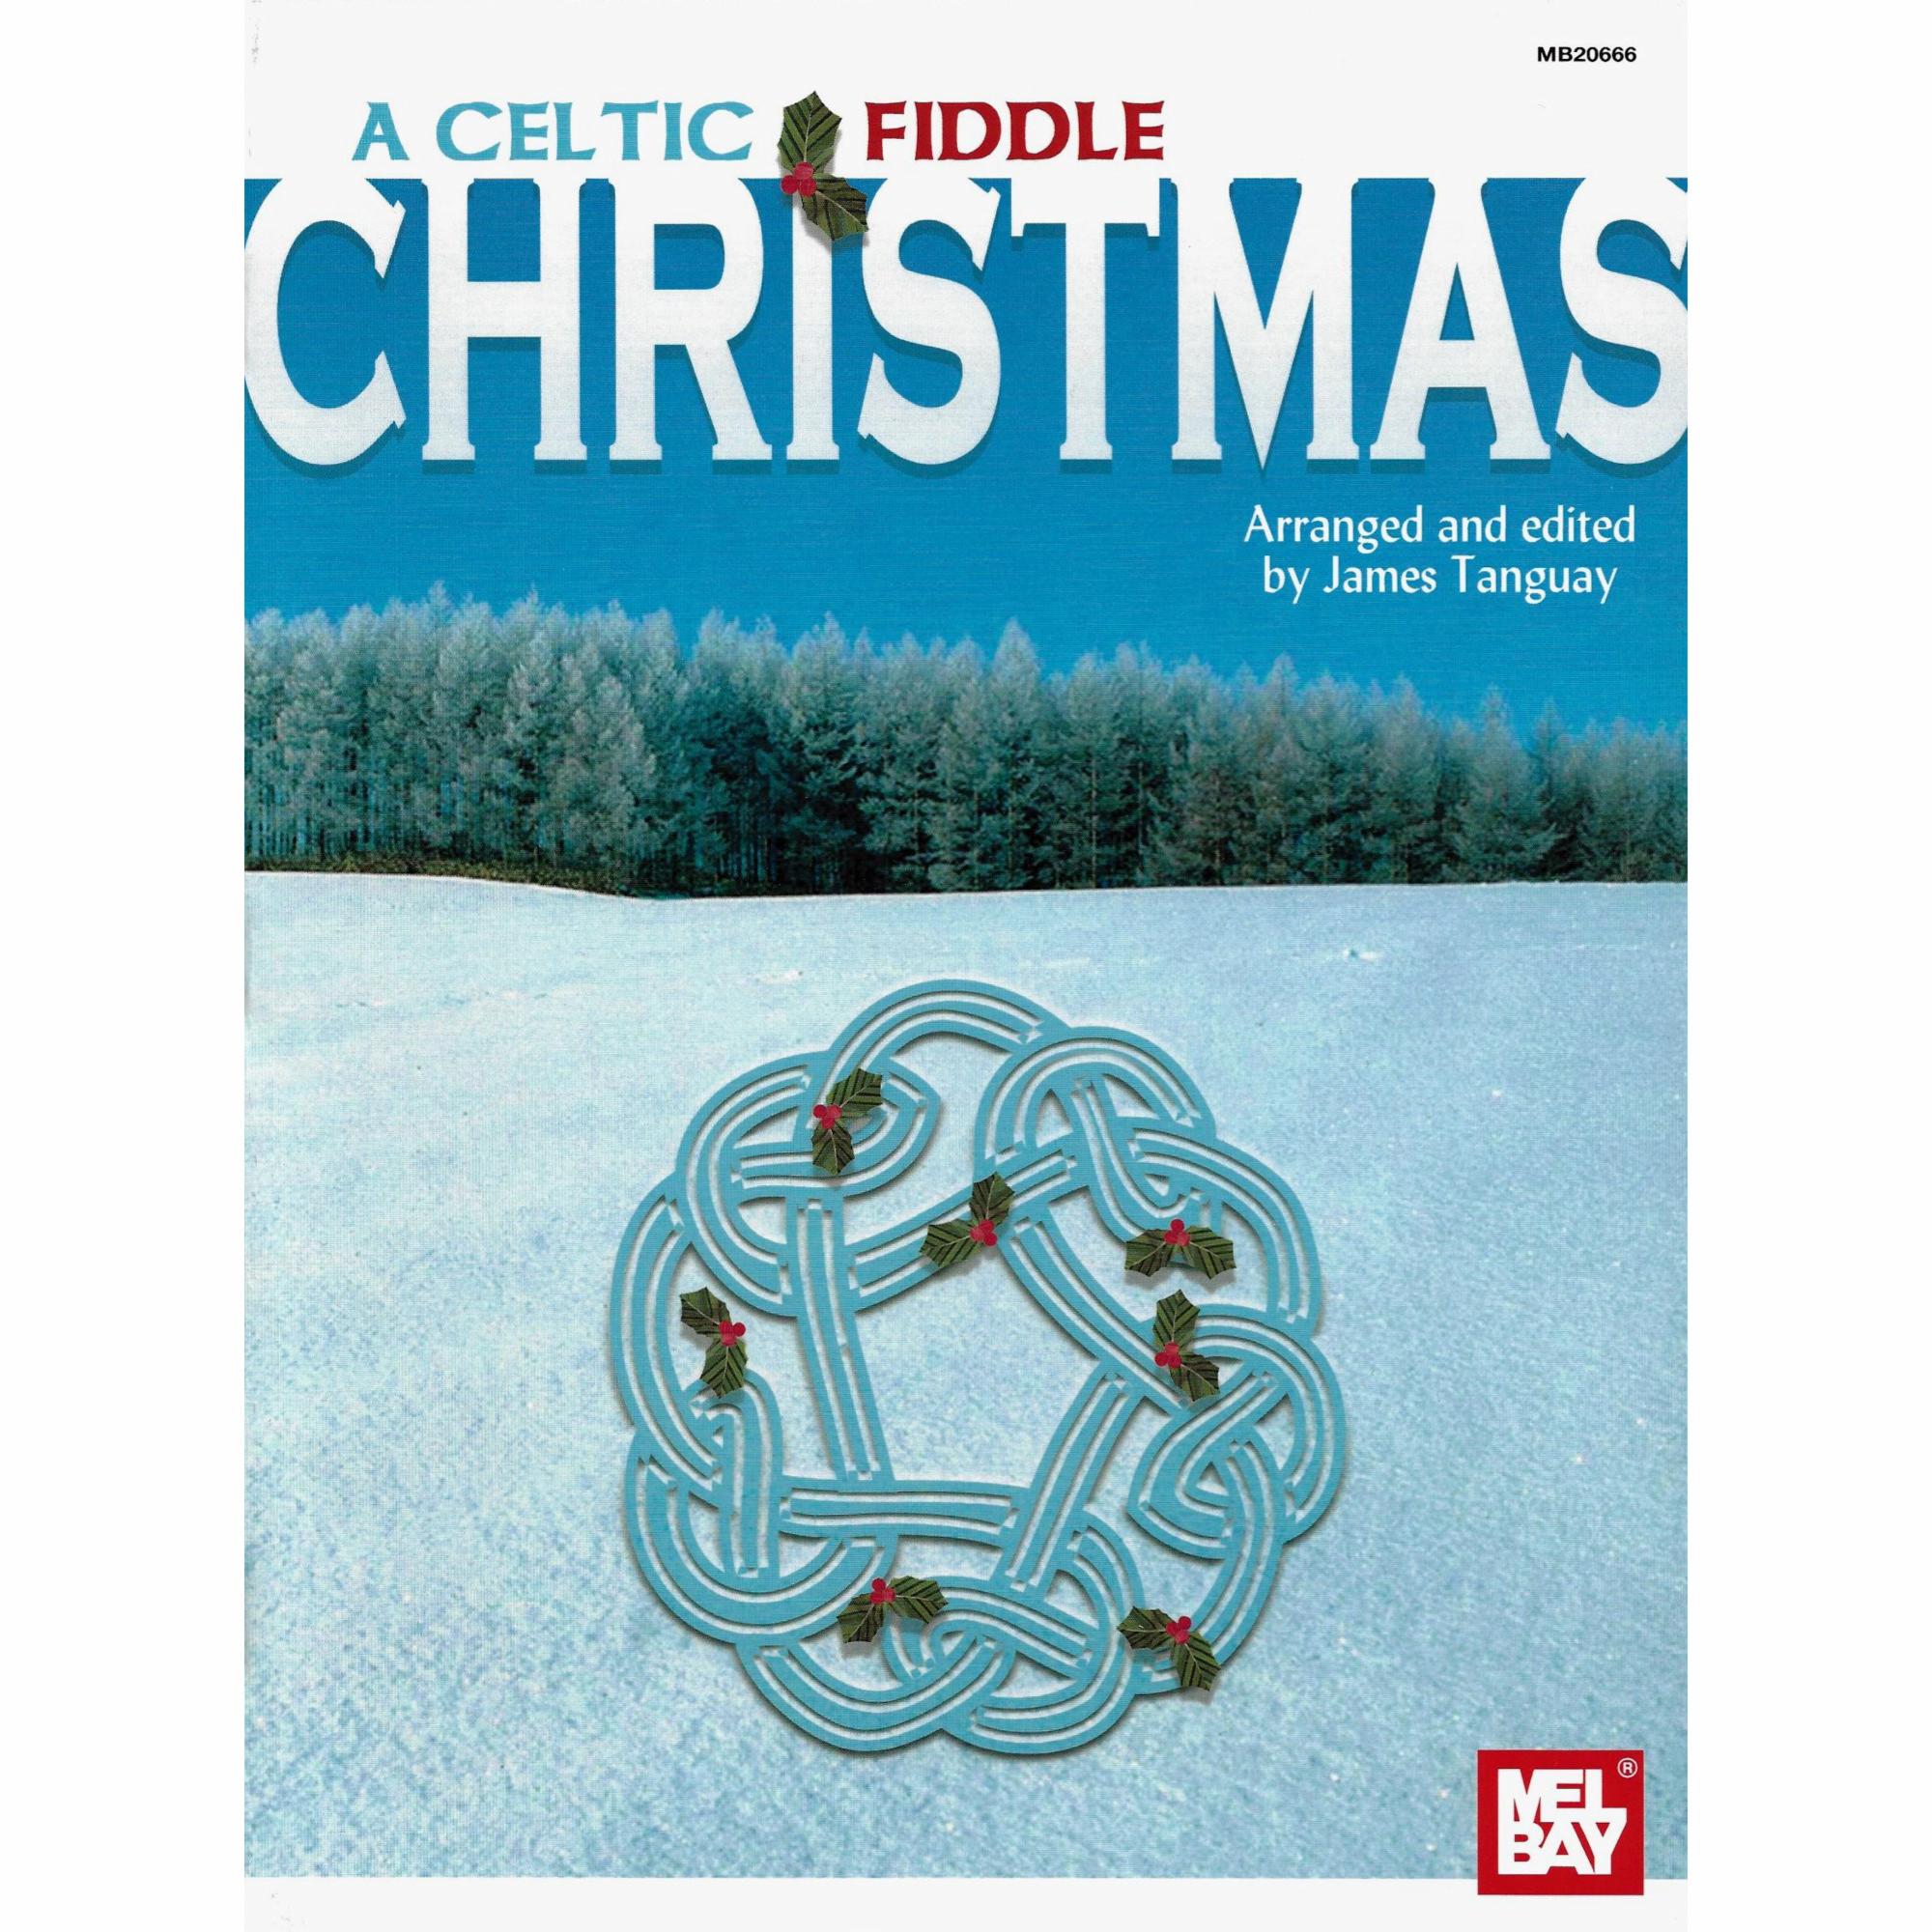 A Celtic Fiddle Christmas